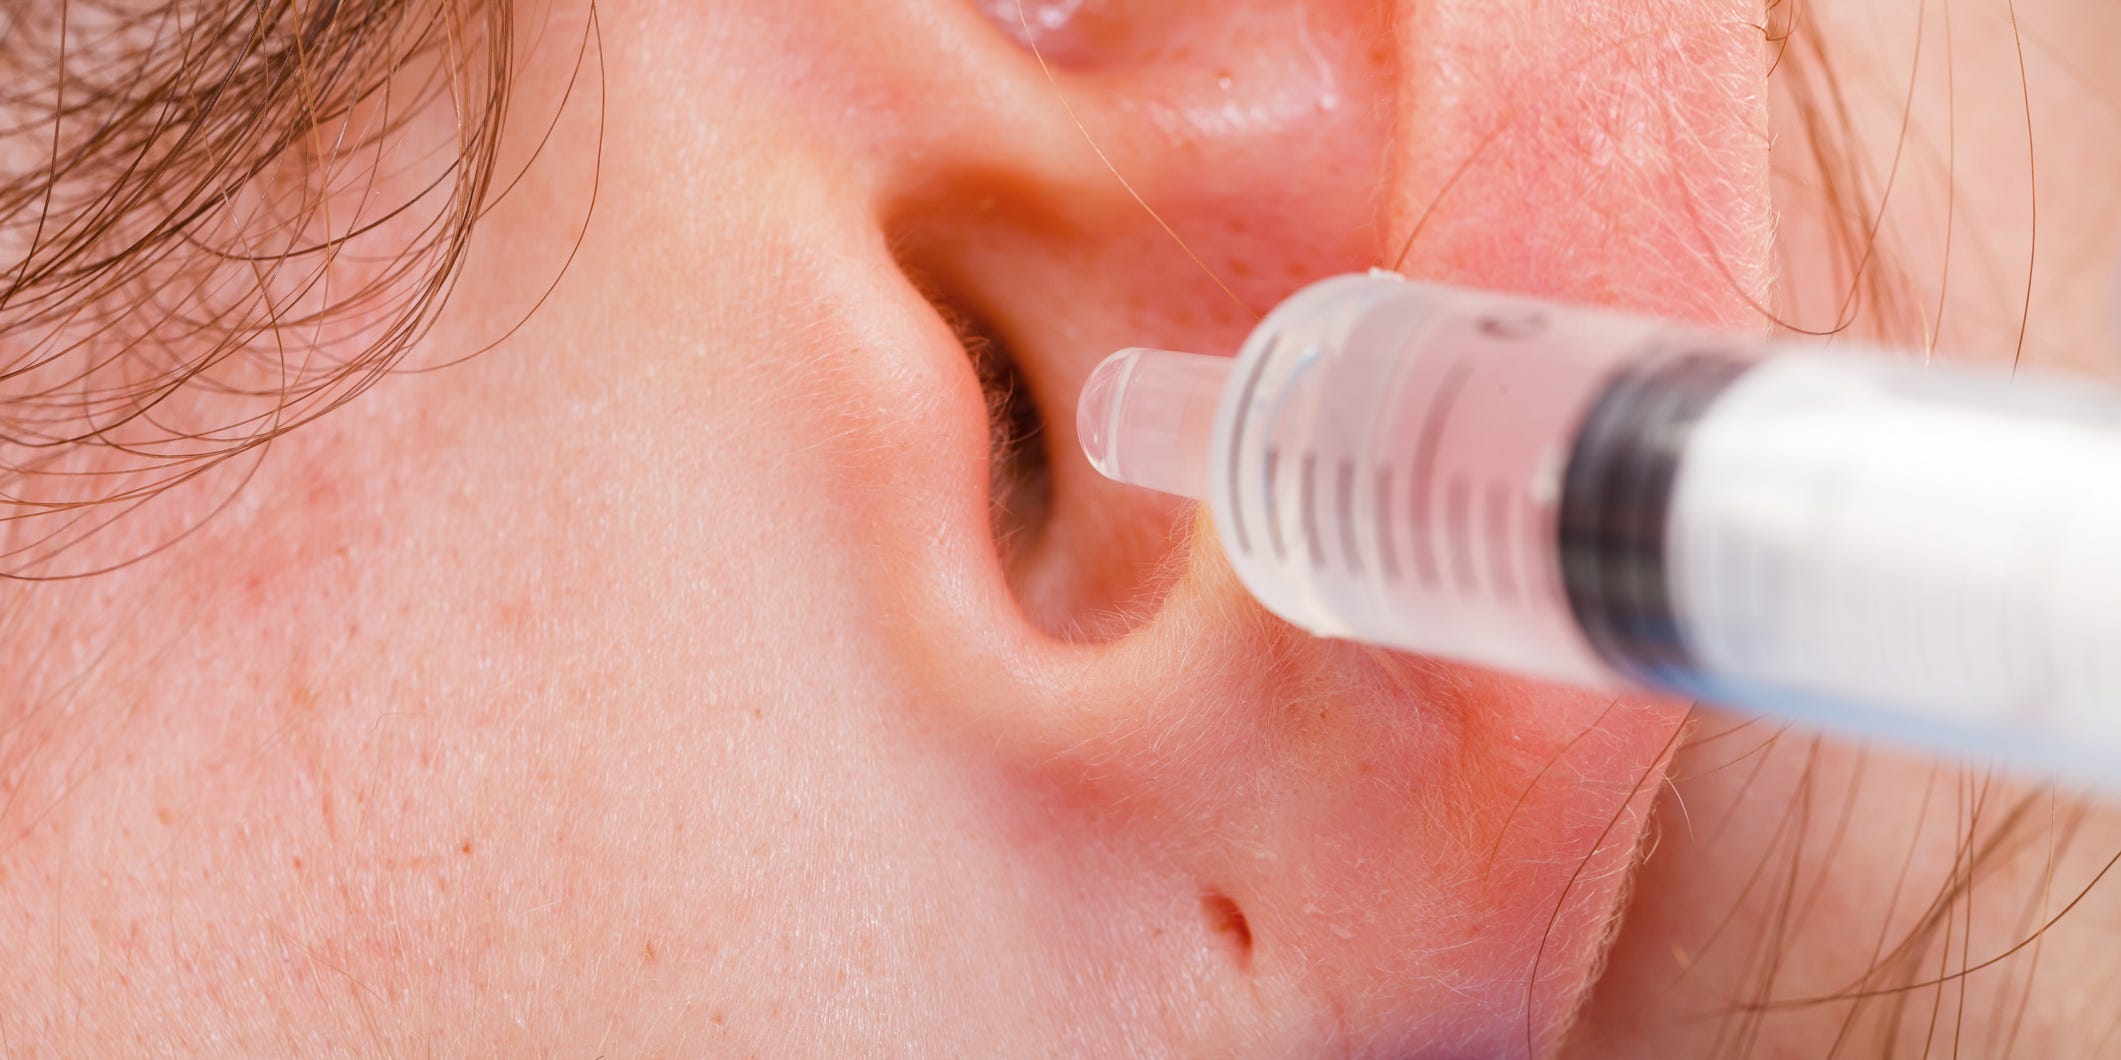 Person with a liquid syringe near their ear.